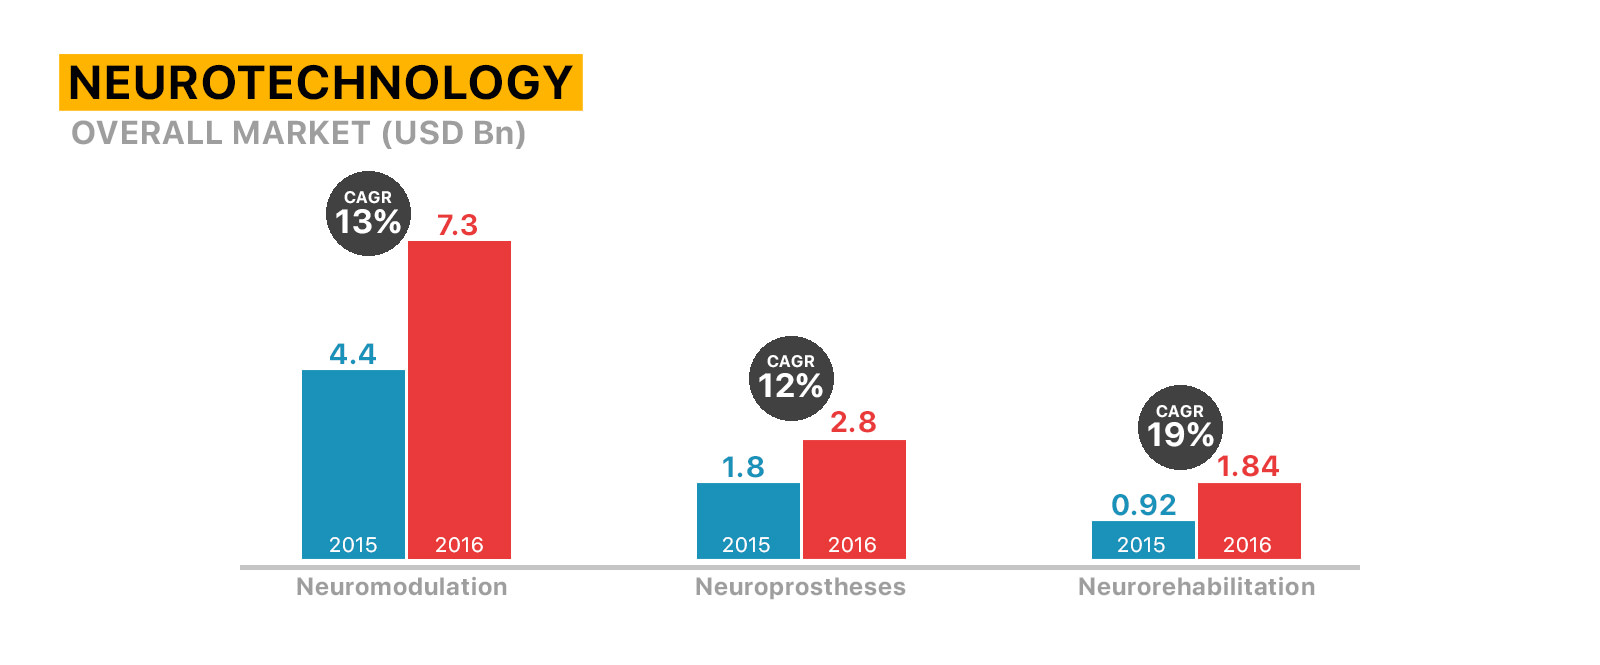 Neurotechnology overall market